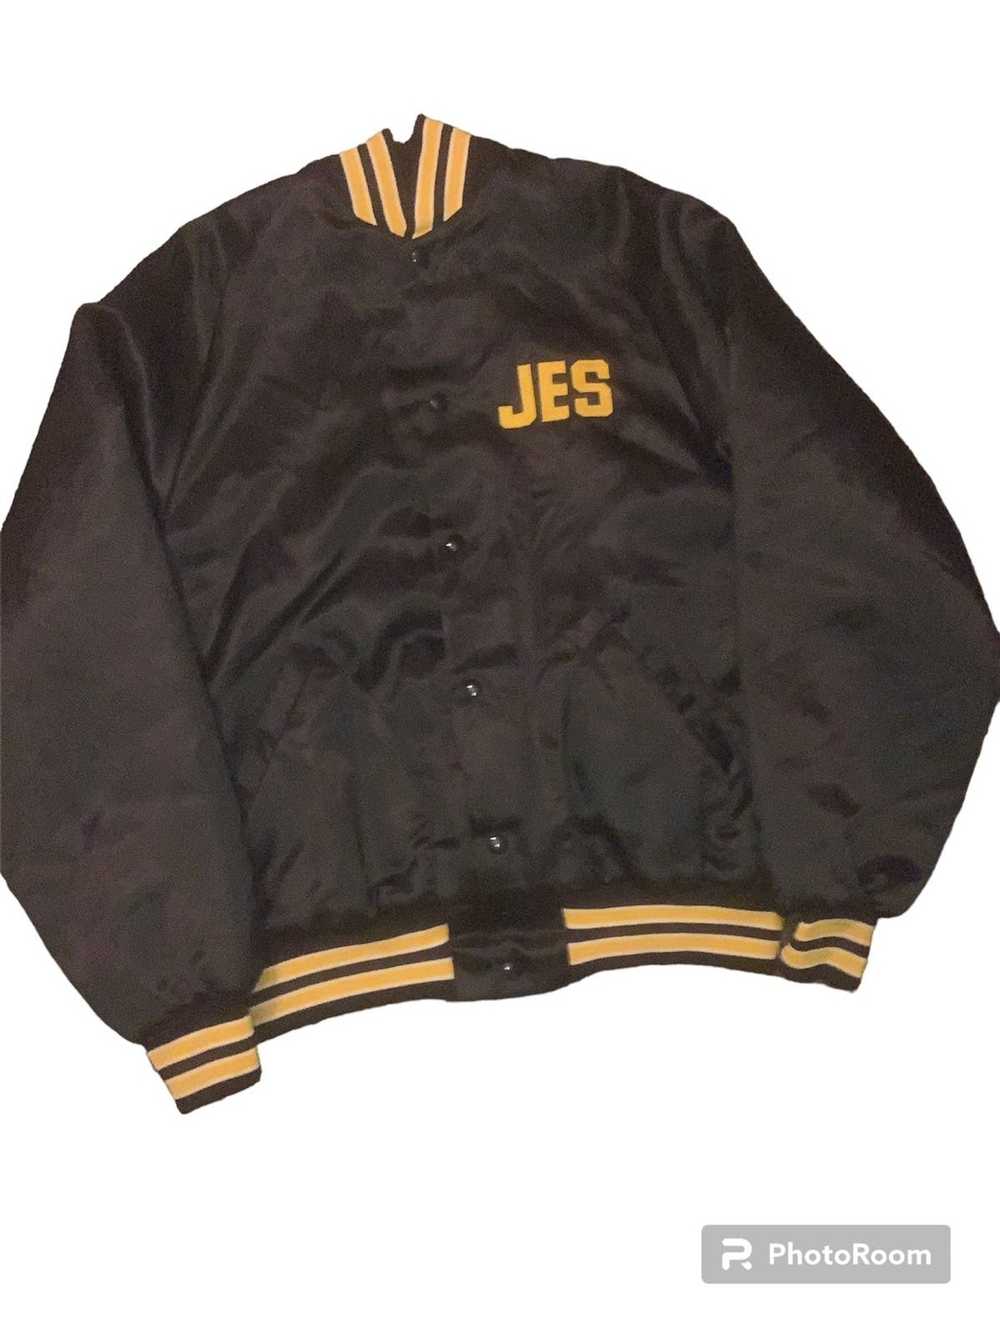 Vintage 1980’s “JES” Varsity Jacket - image 1